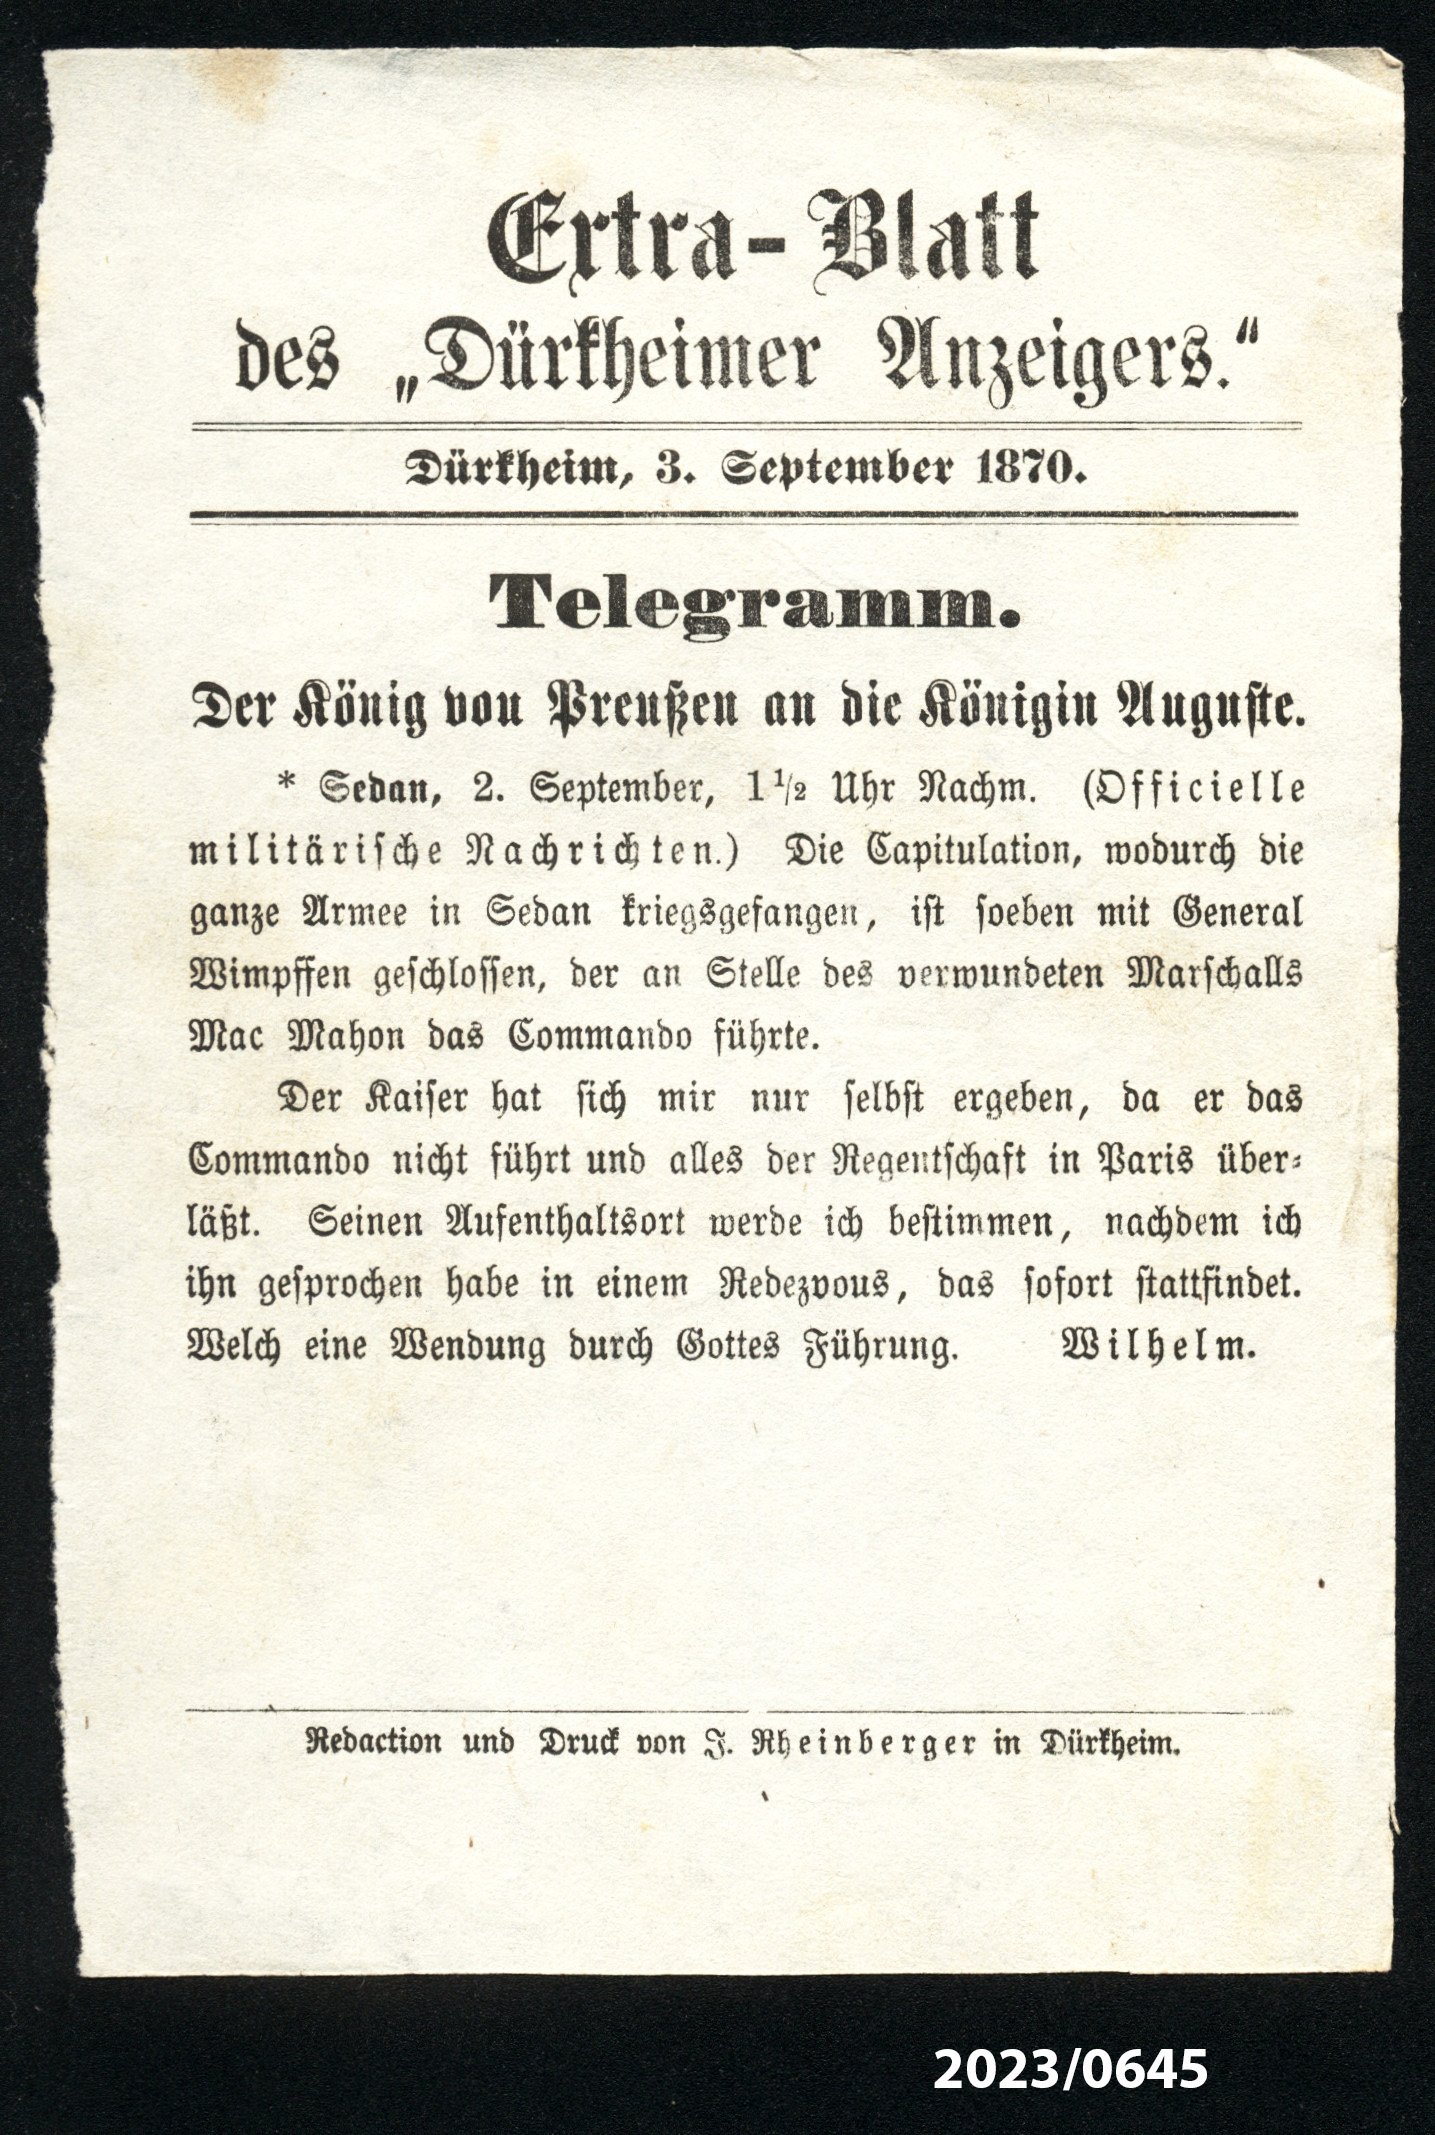 Extra-Blatt des "Dürkheimer Anzeigers." 3.9.1870 (Stadtmuseum Bad Dürkheim im Kulturzentrum Haus Catoir CC BY-NC-SA)